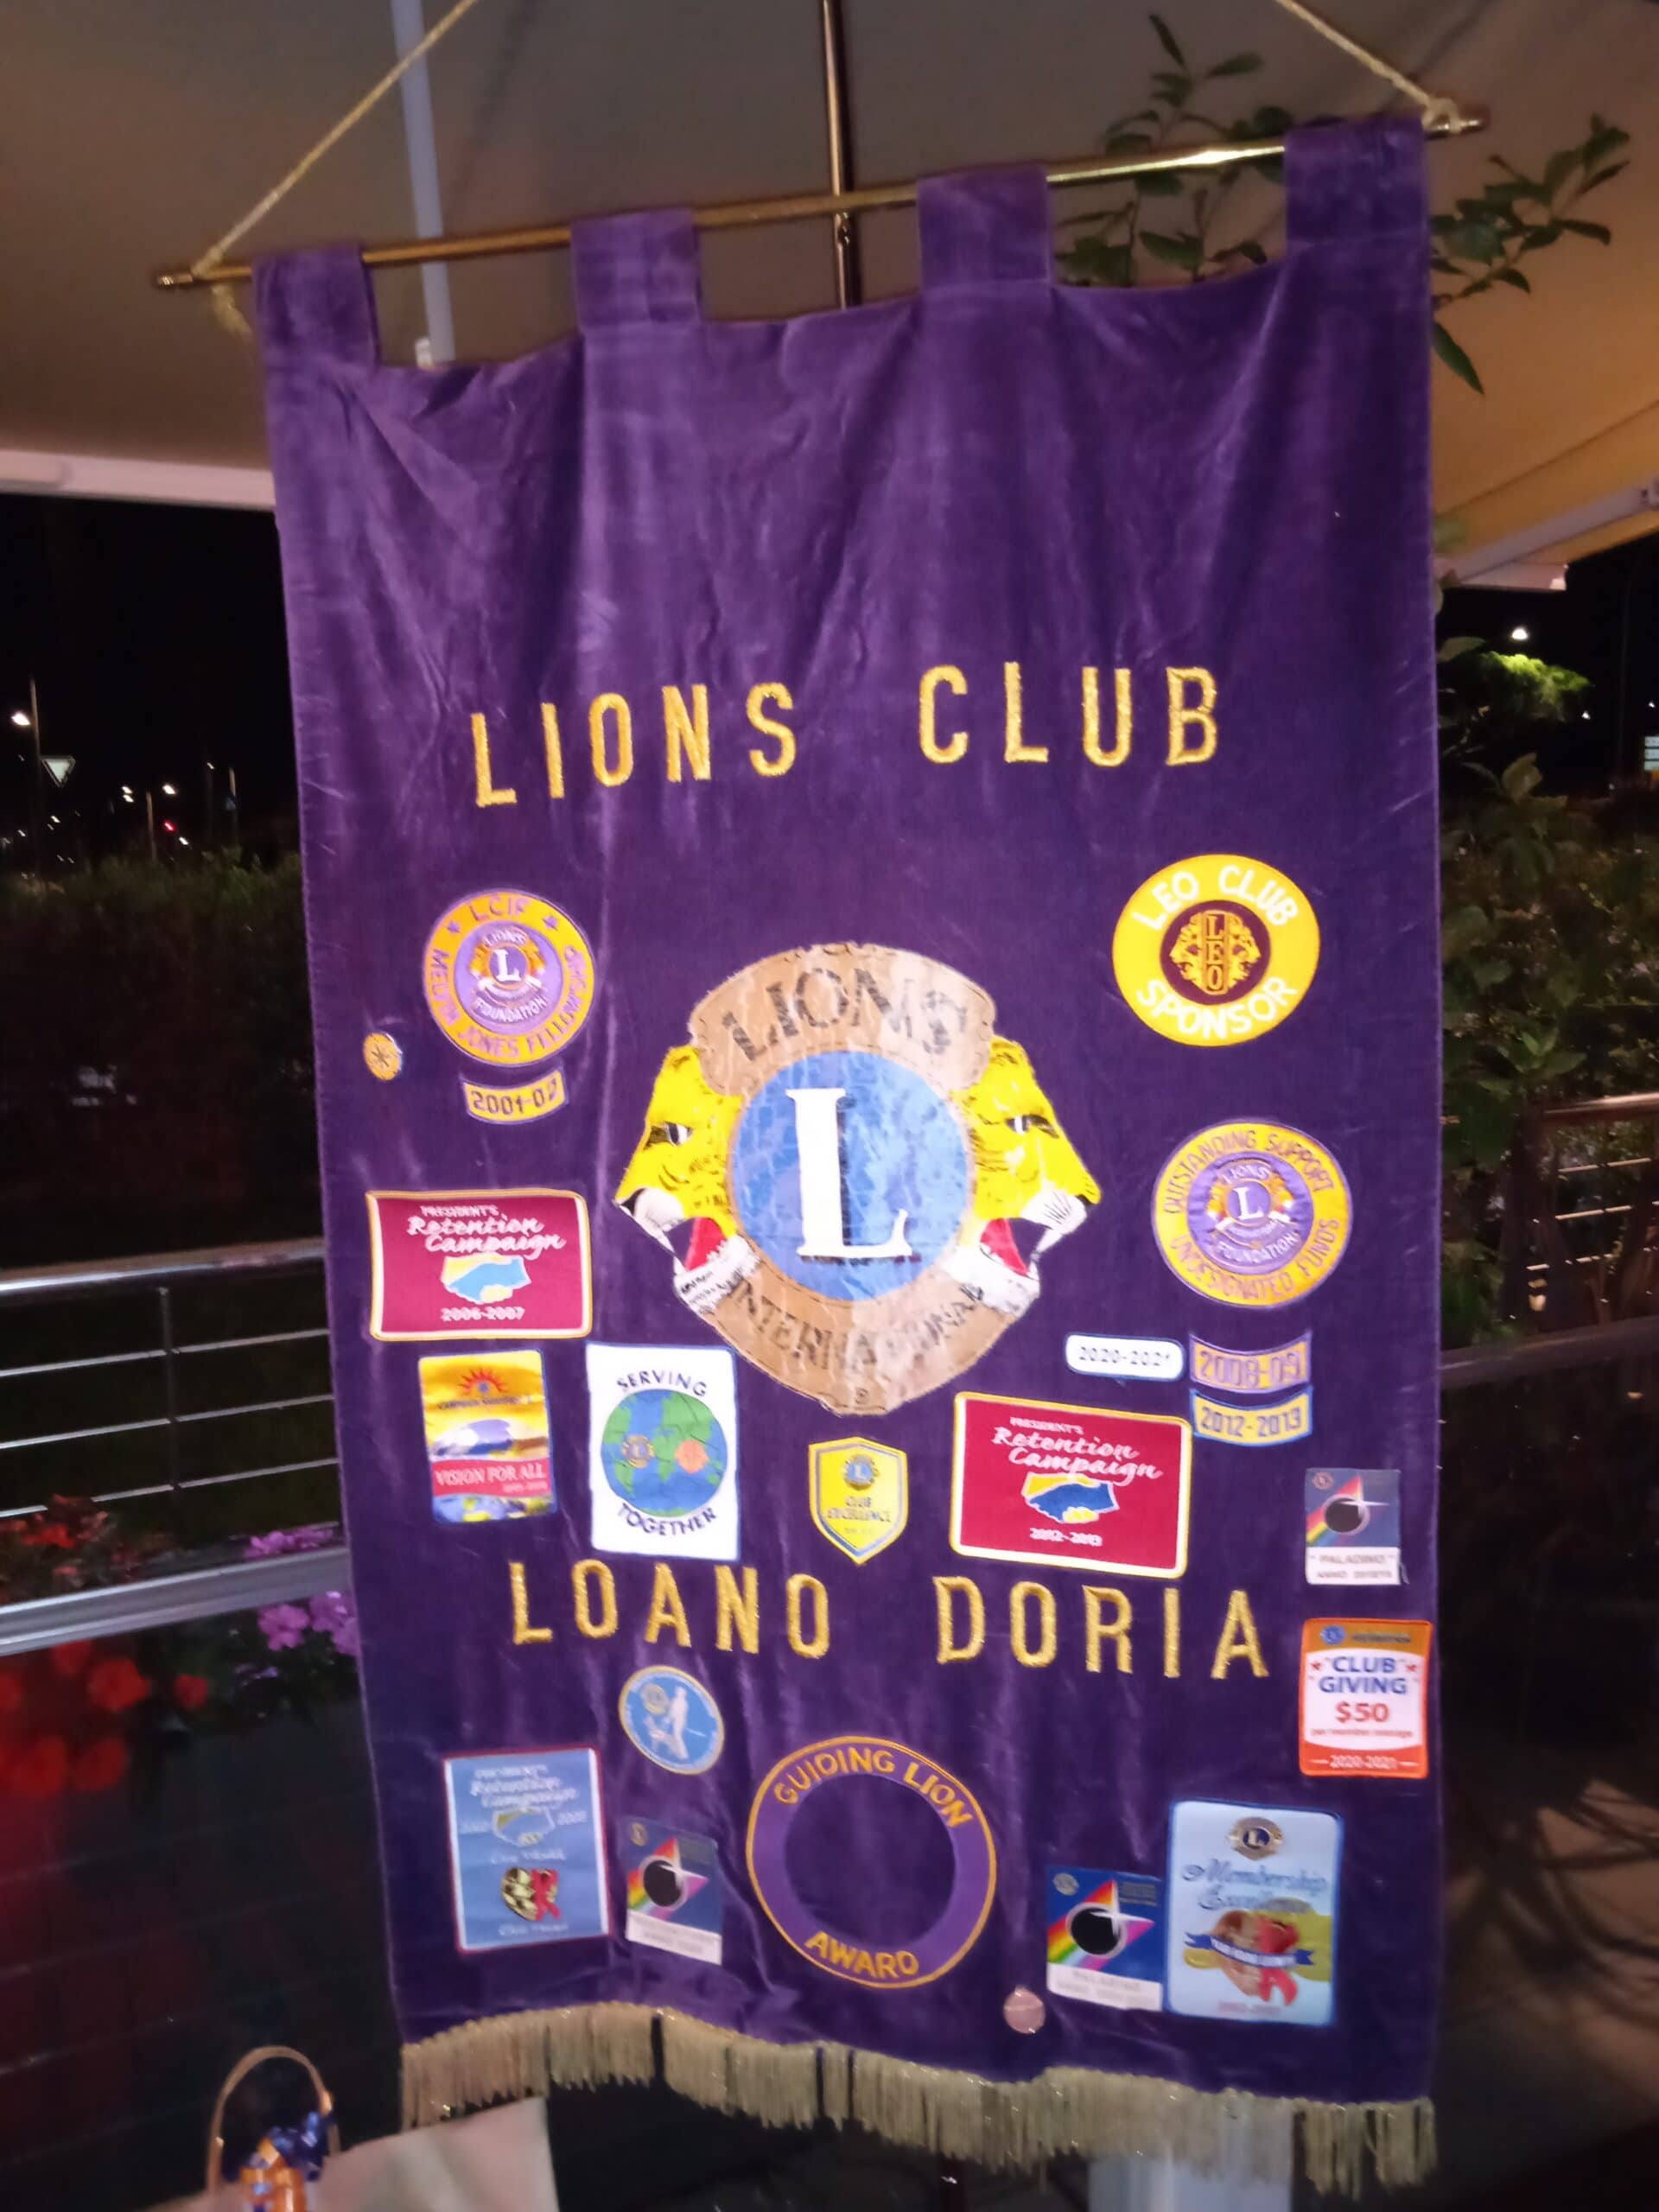 Lions Club Loano Doria scaled